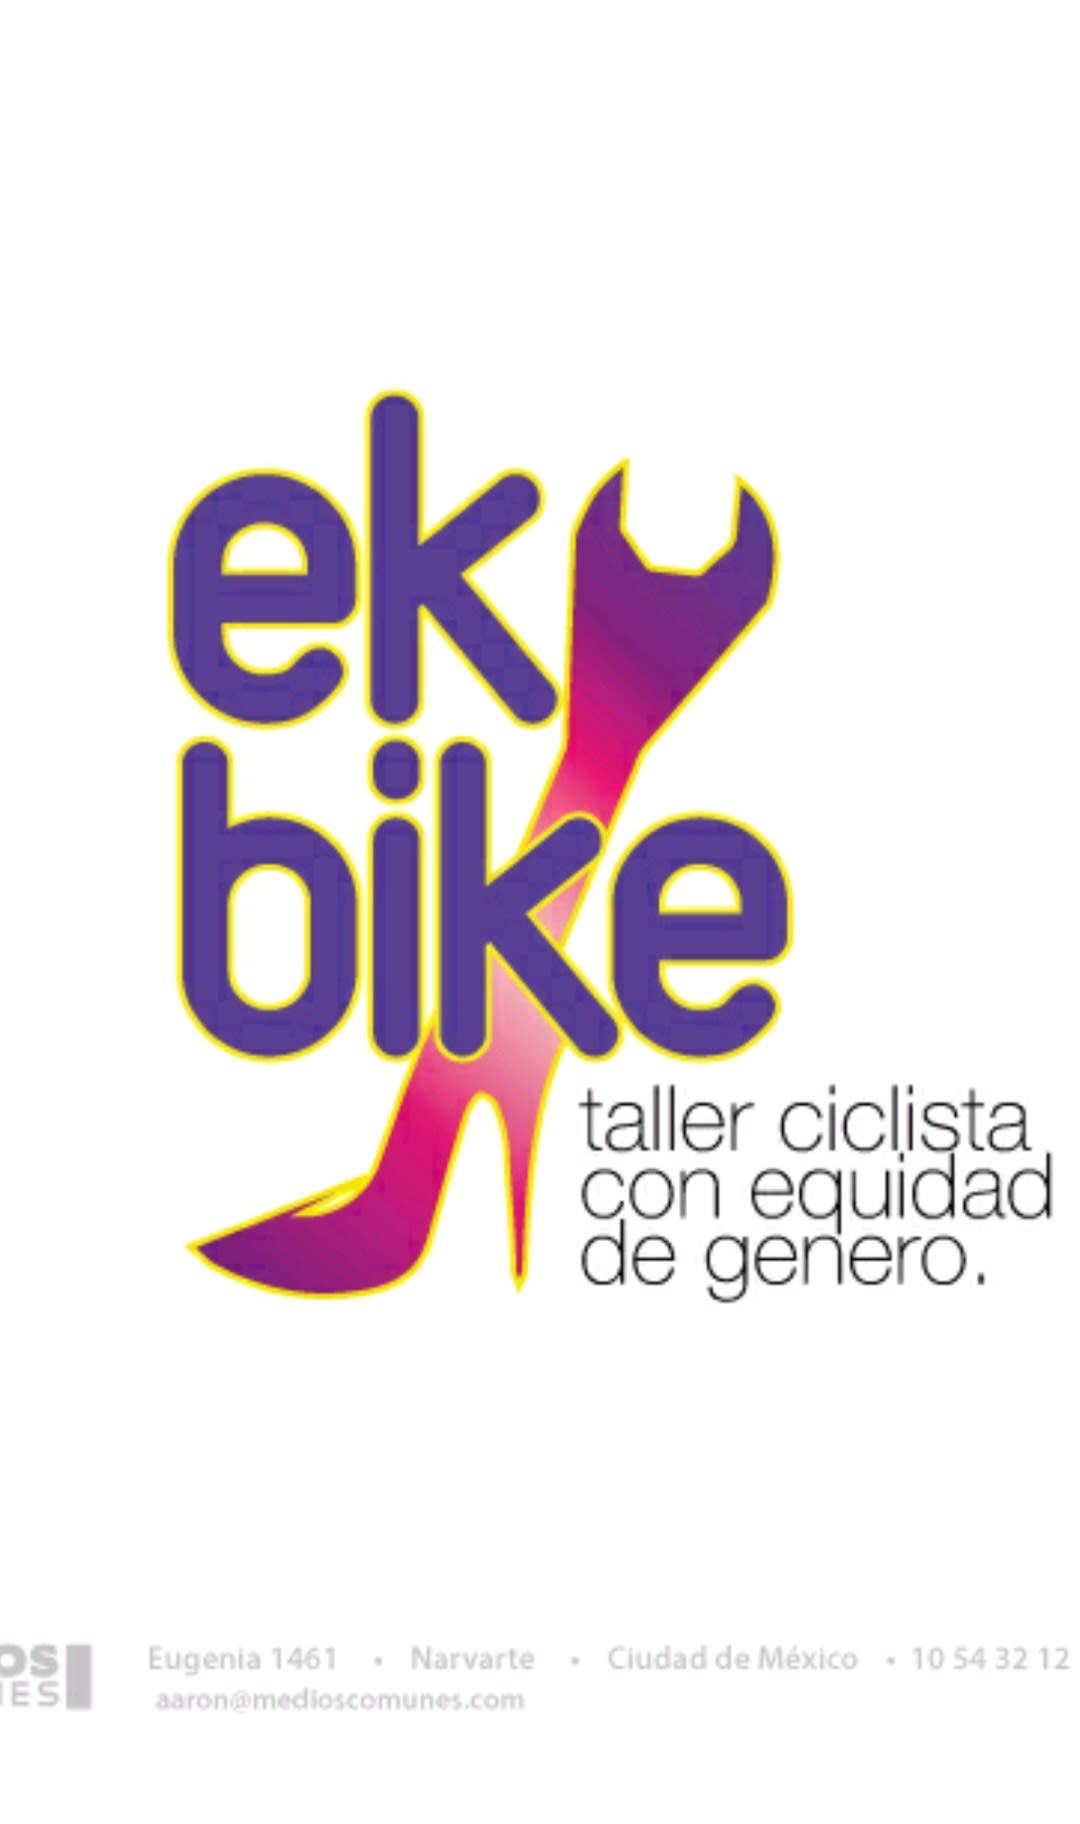 Ek Bike